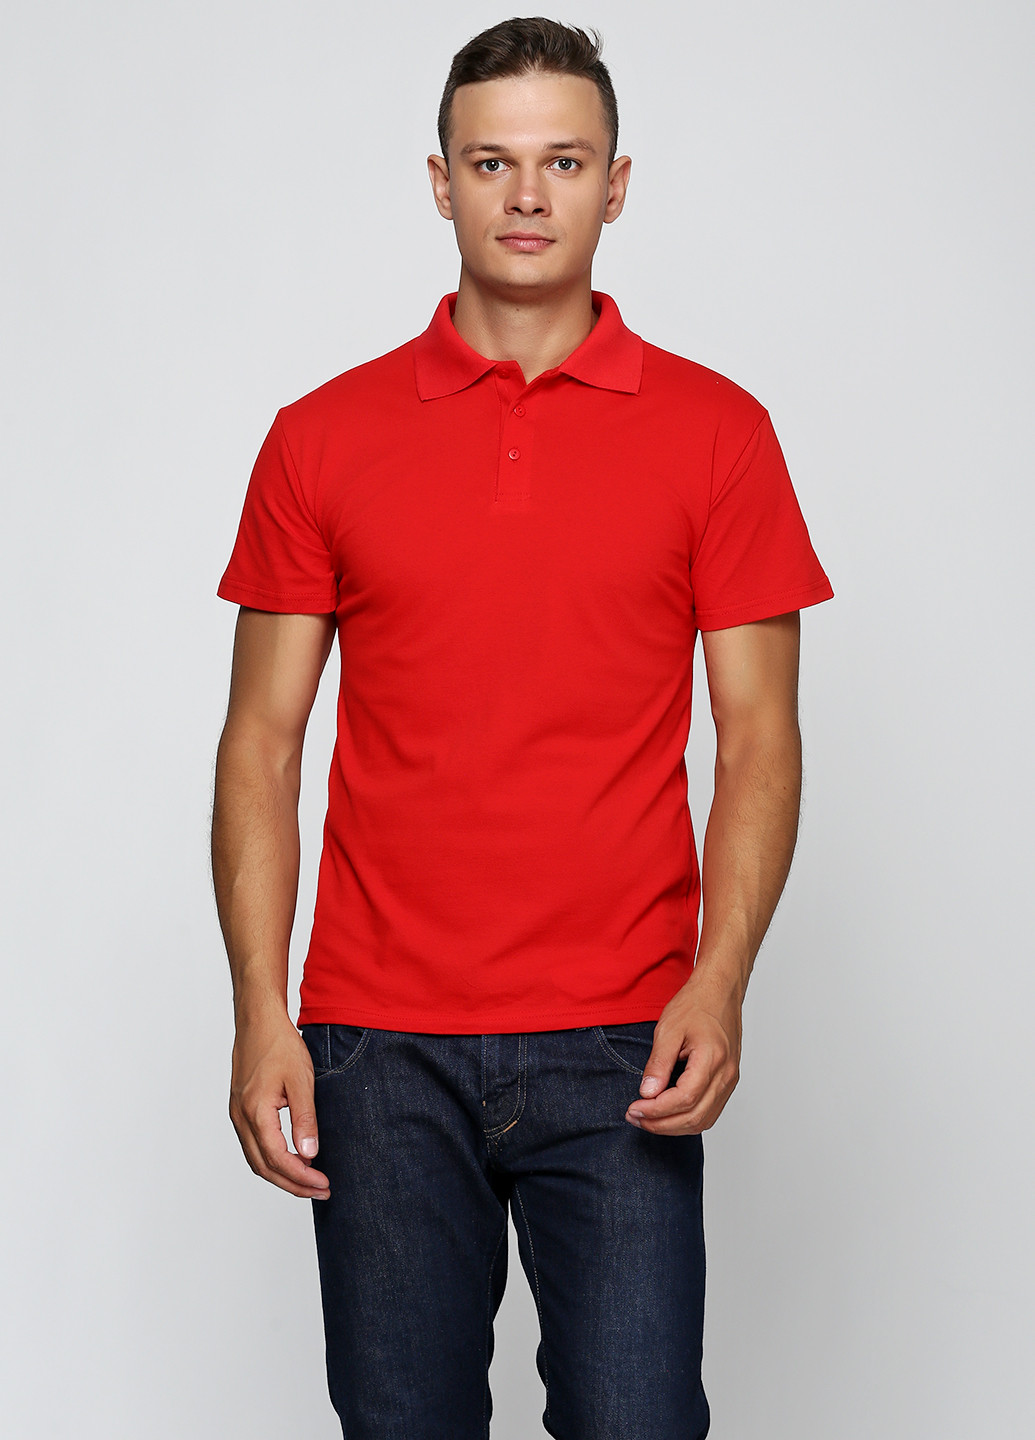 Красная футболка-поло для мужчин Роза